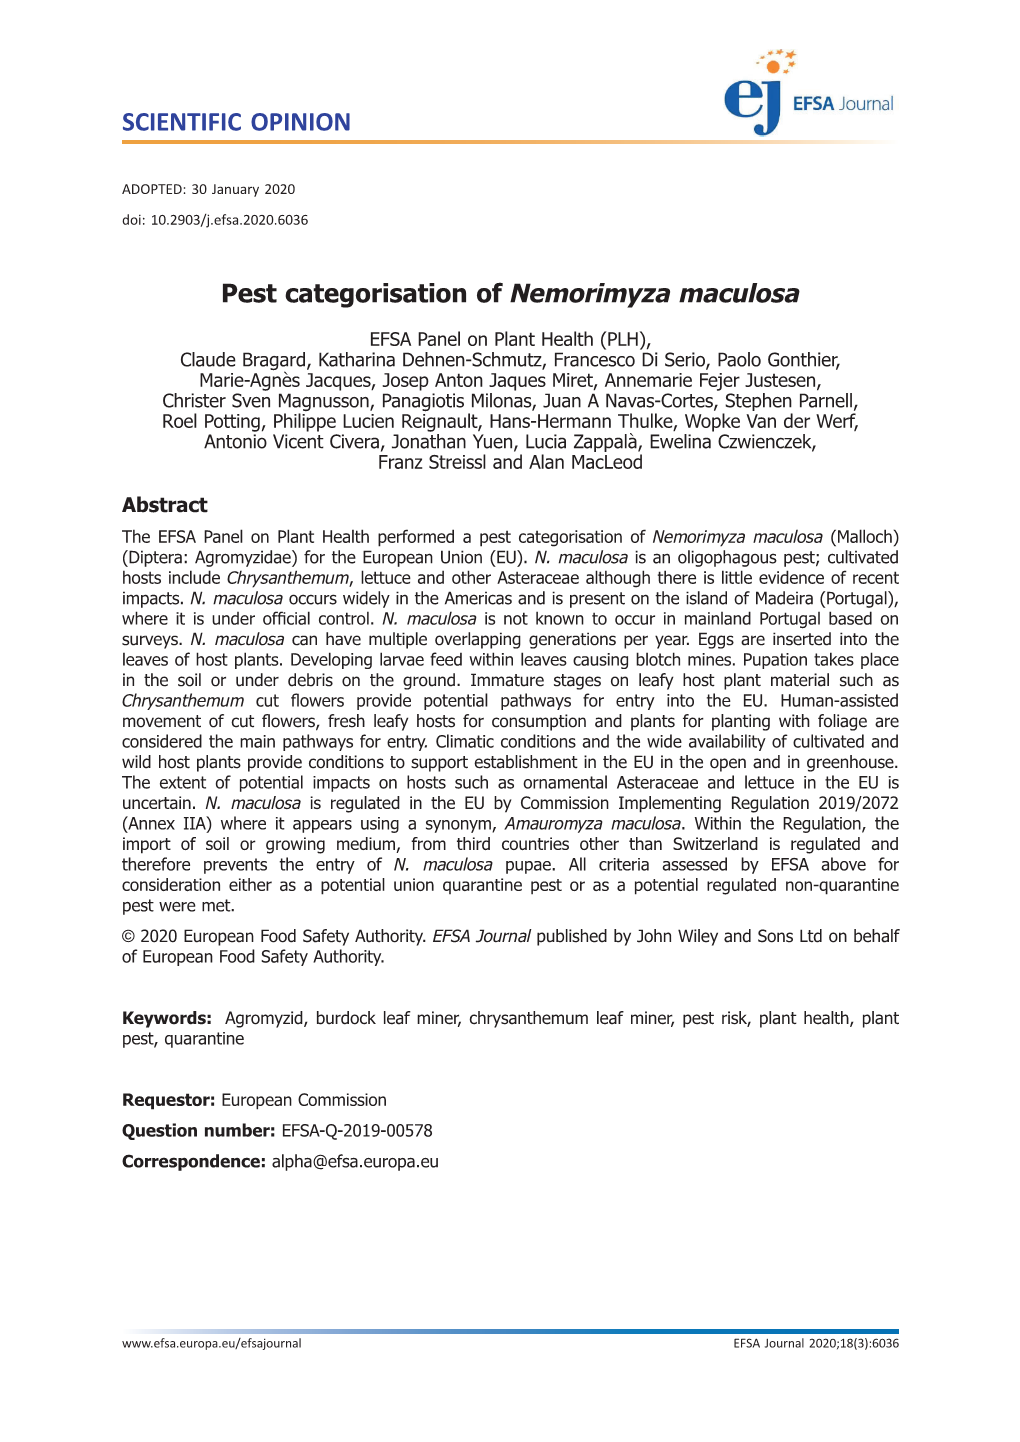 Pest Categorisation of Nemorimyza Maculosa